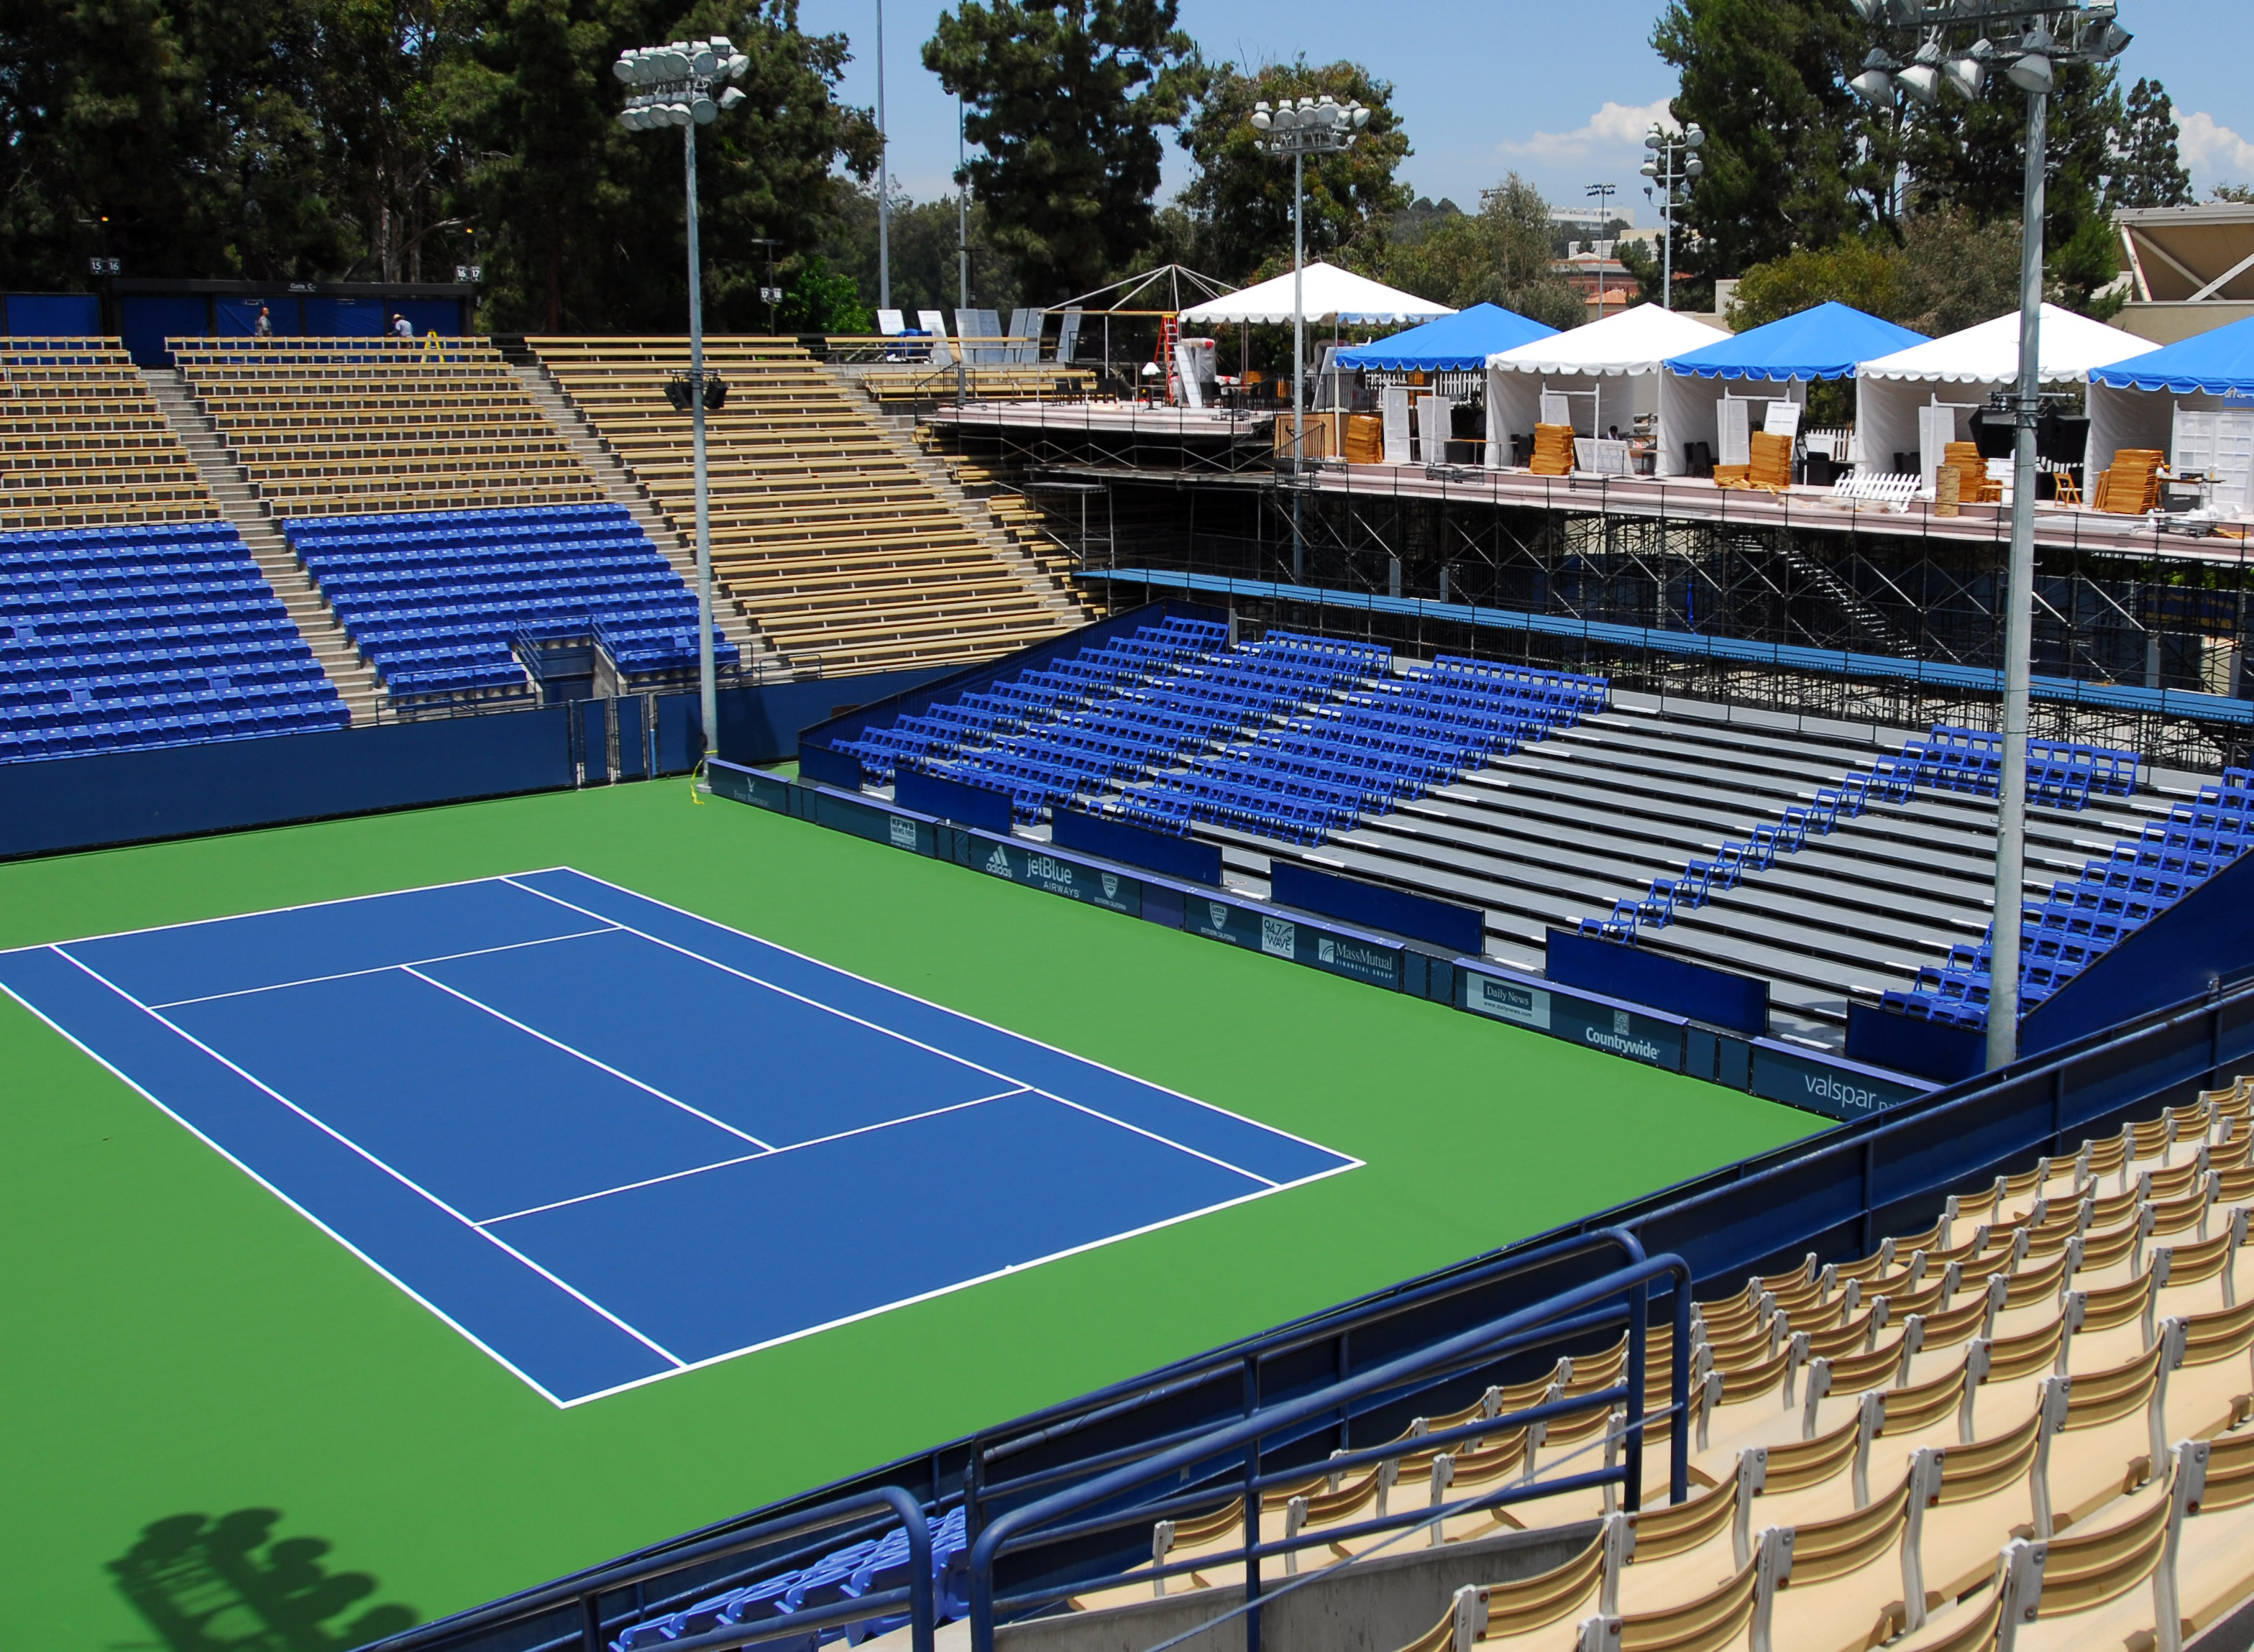 Straus Stadium prepares for LA Tennis Open next week Daily Bruin